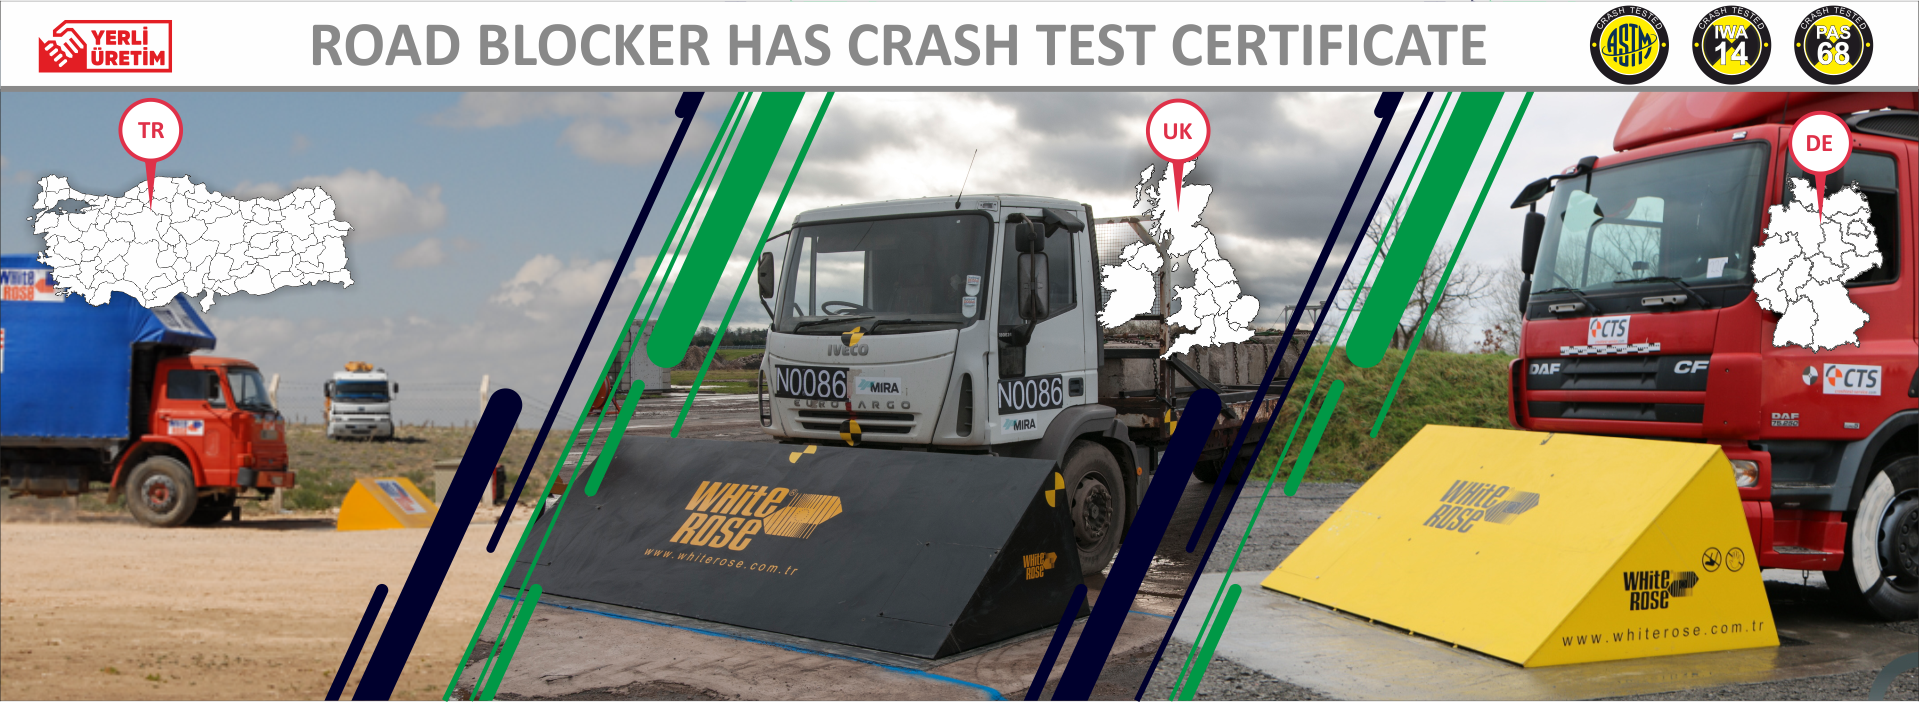 Crash Test Certified Road Blockers